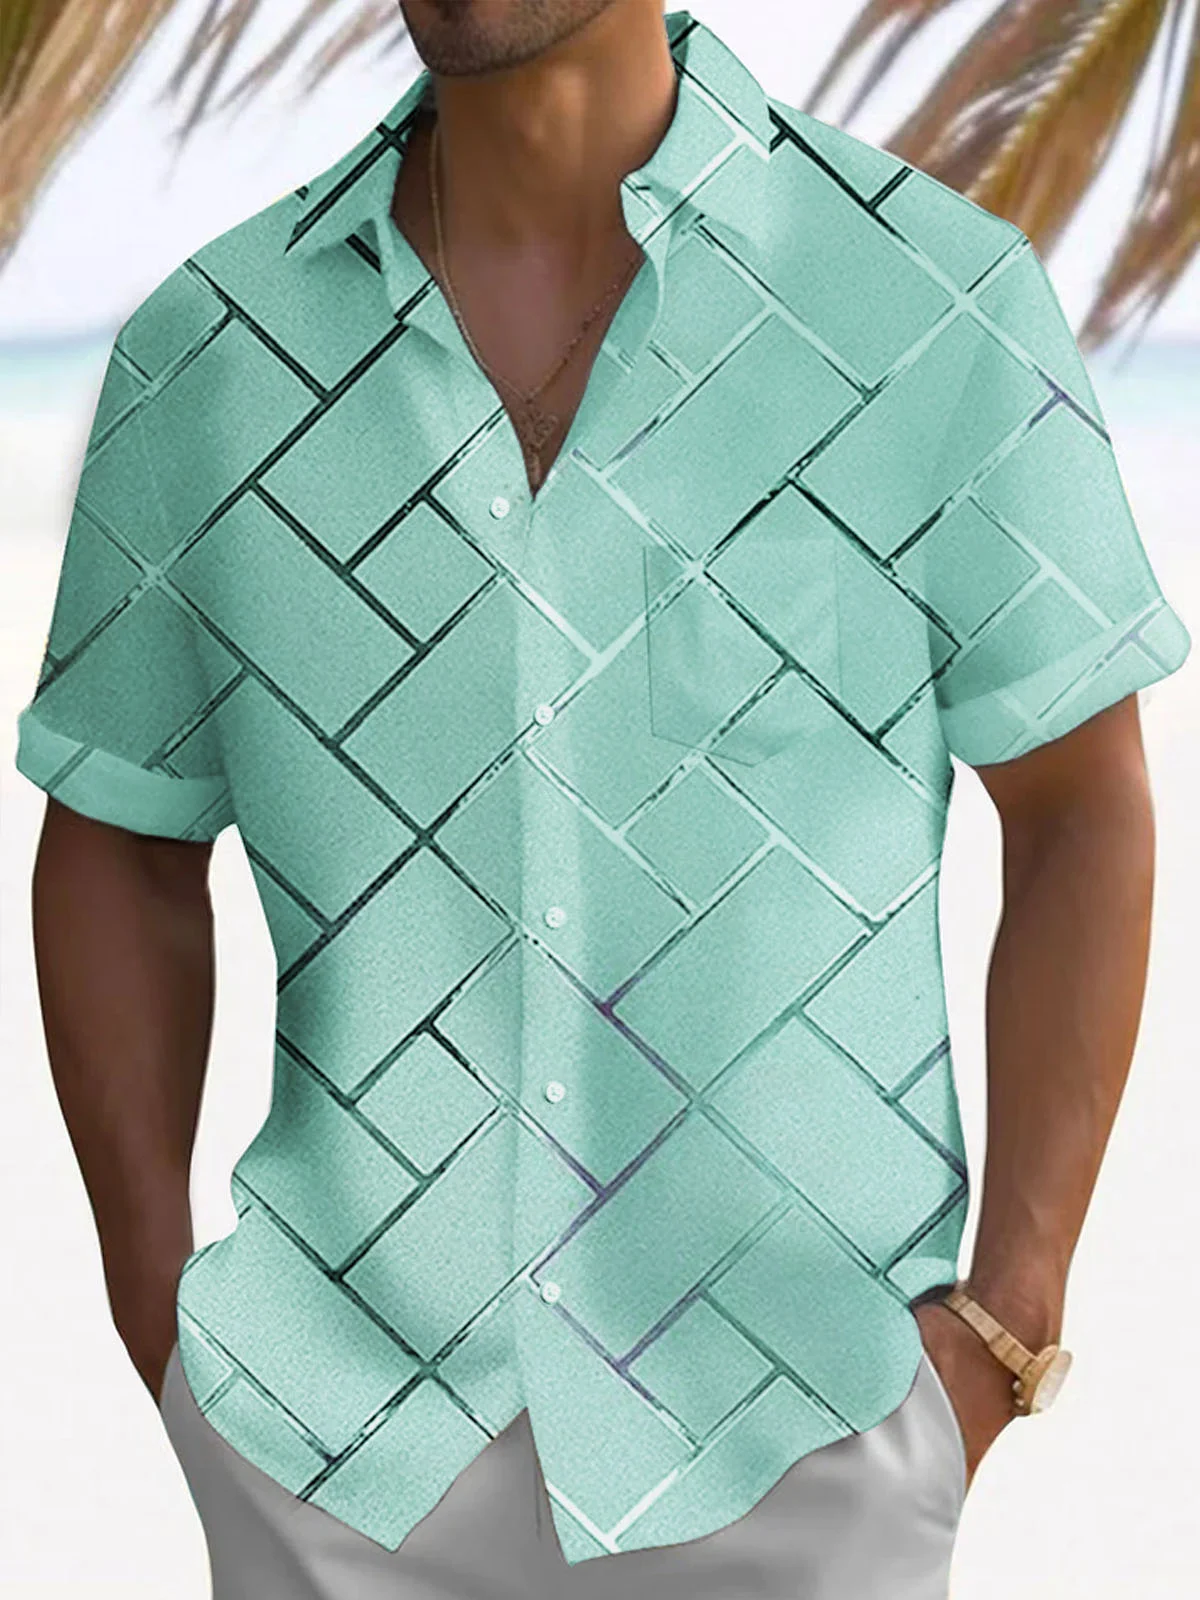 Royaura®Retro Geometric 3D Tech Print Men's Button Pocket Short Sleeve Shirt